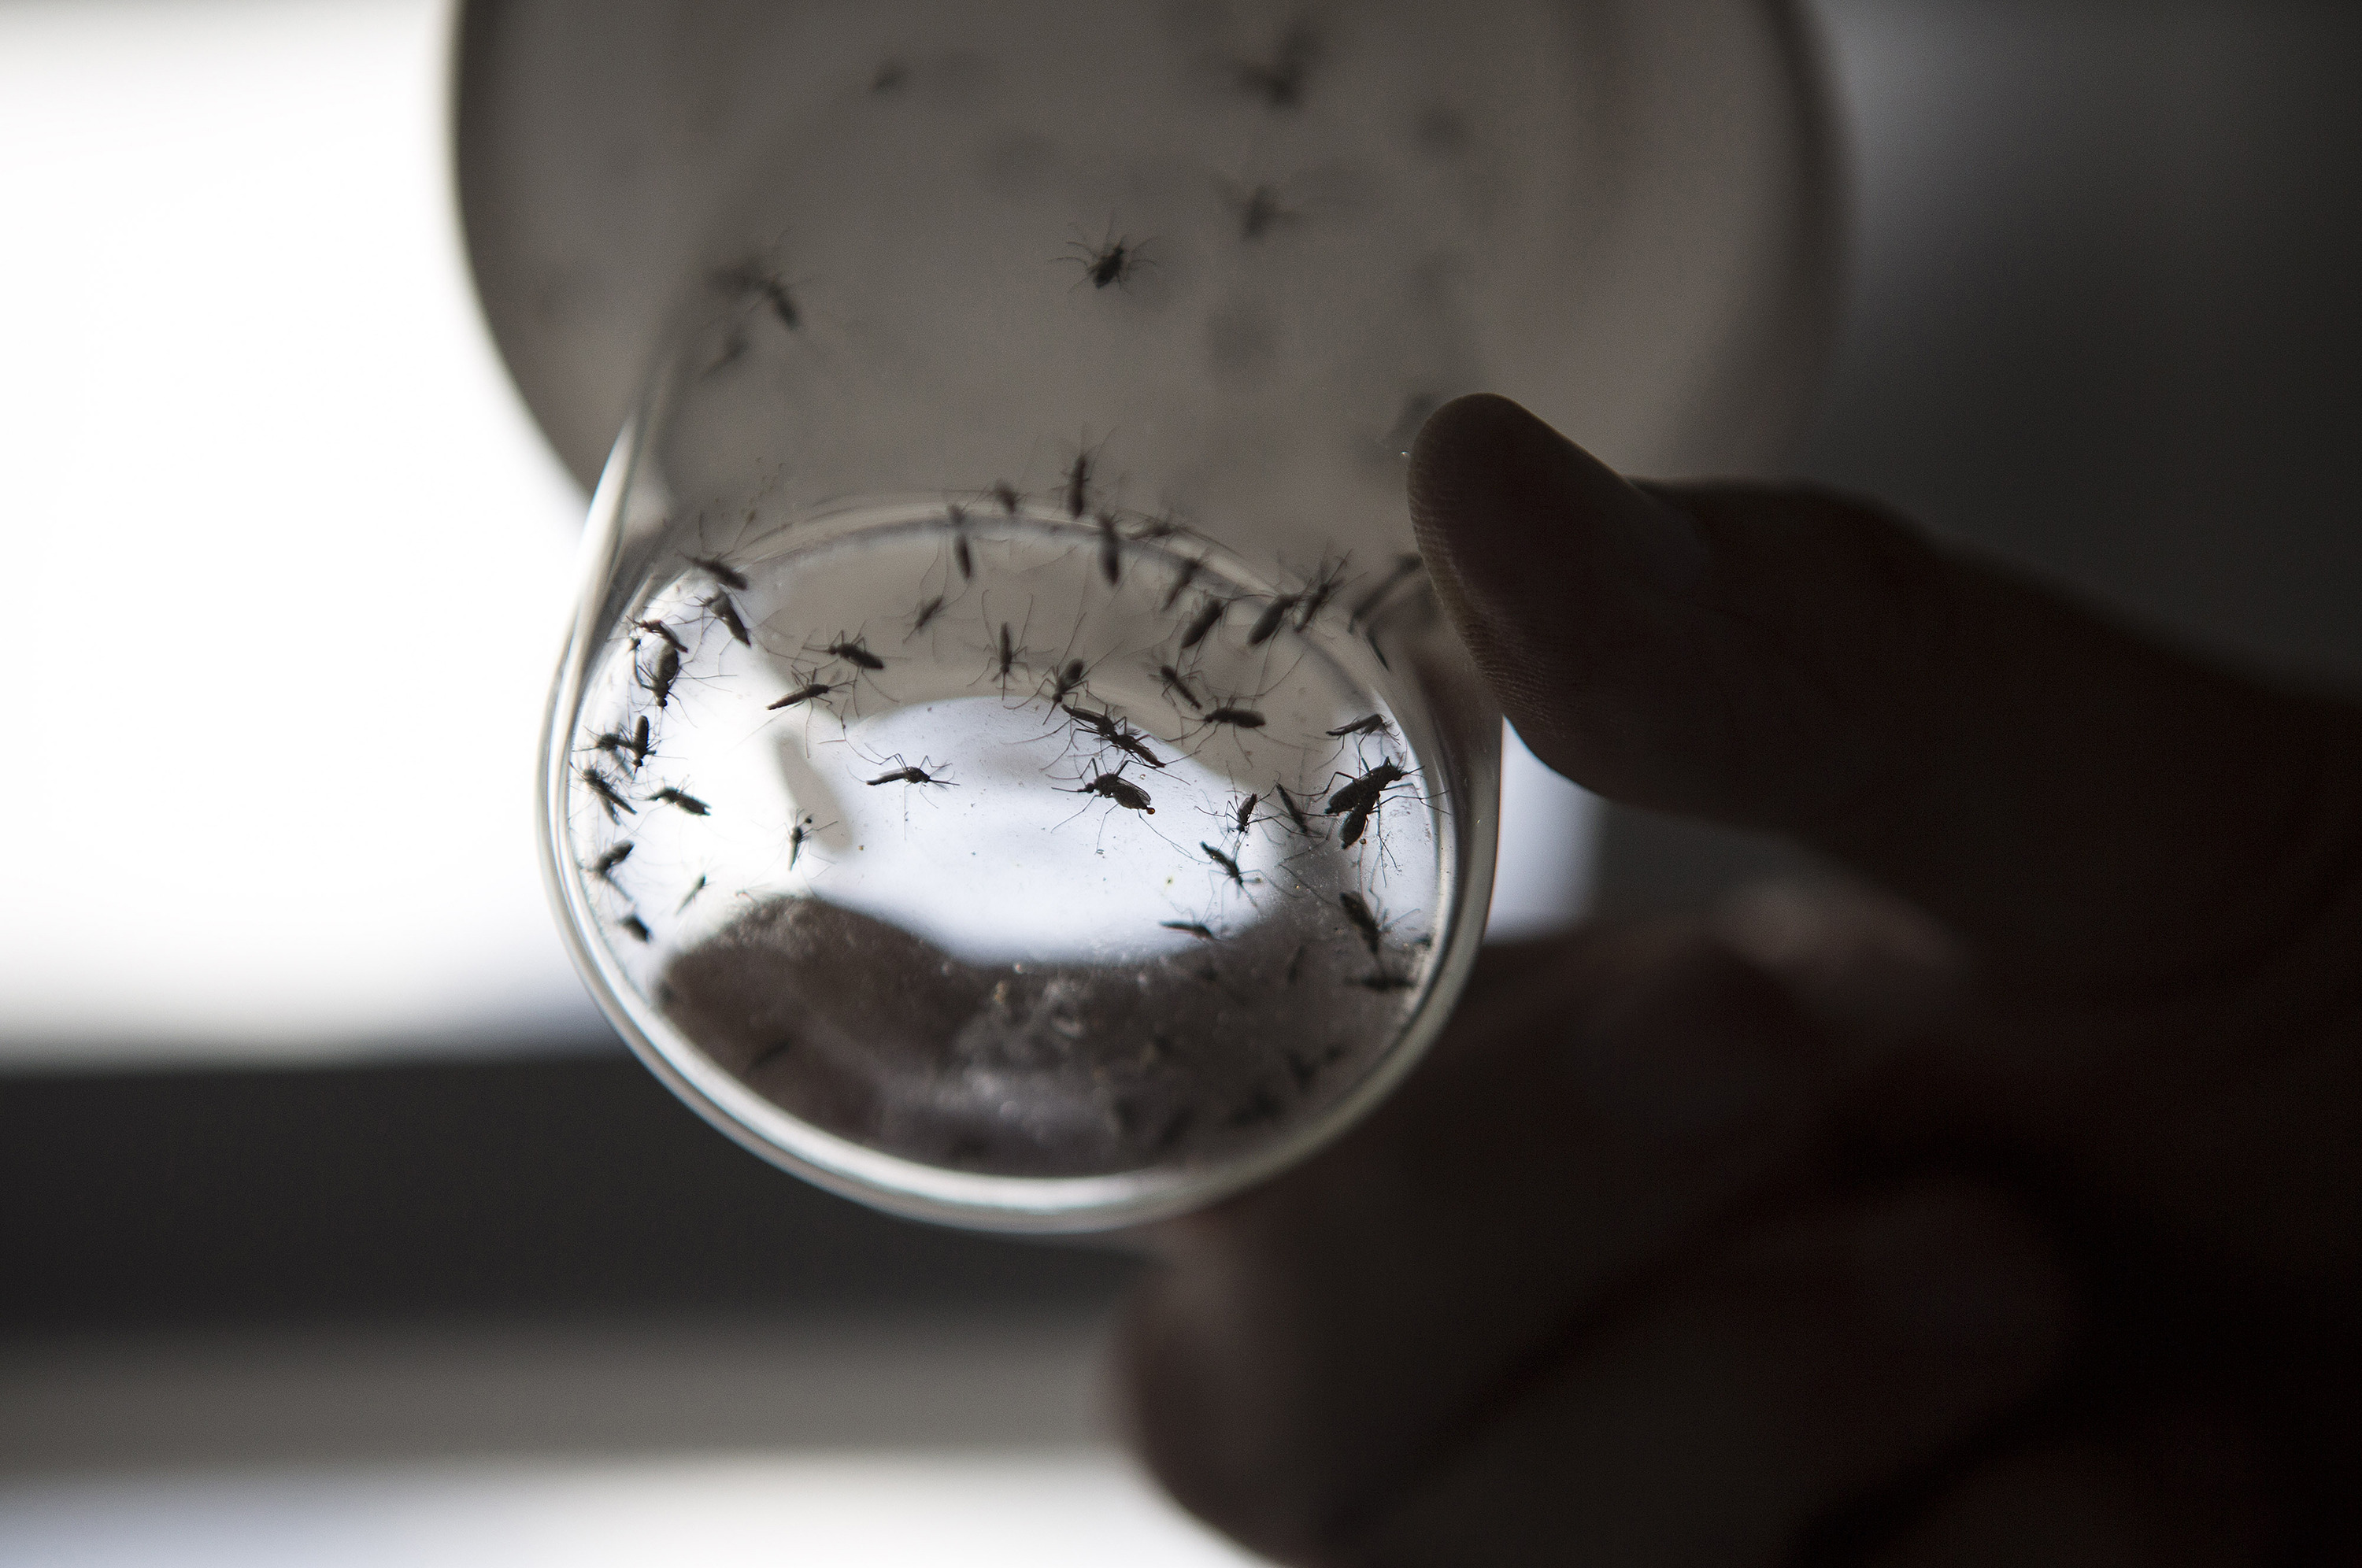 Suman 93 casos de zika en el país, reporta la Ssa